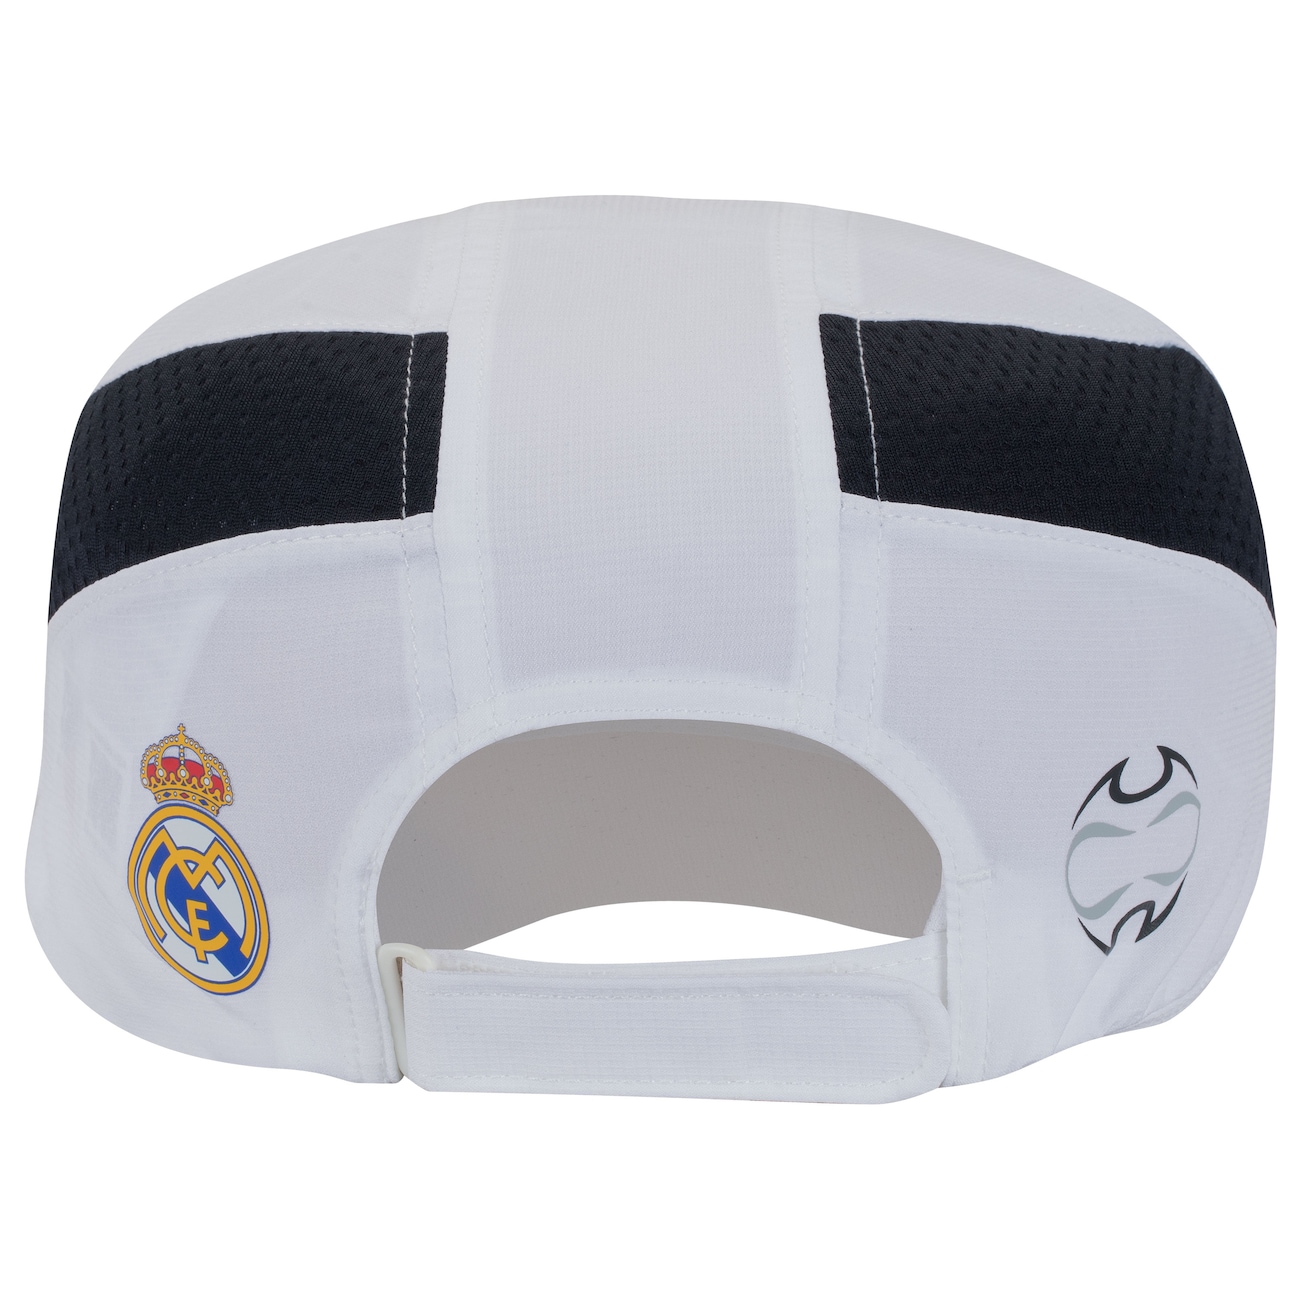 Acuerdo Injusto Gruñido Boné Real Madrid adidas Aba Curva Strapback Teamgeist - Adulto | Centauro